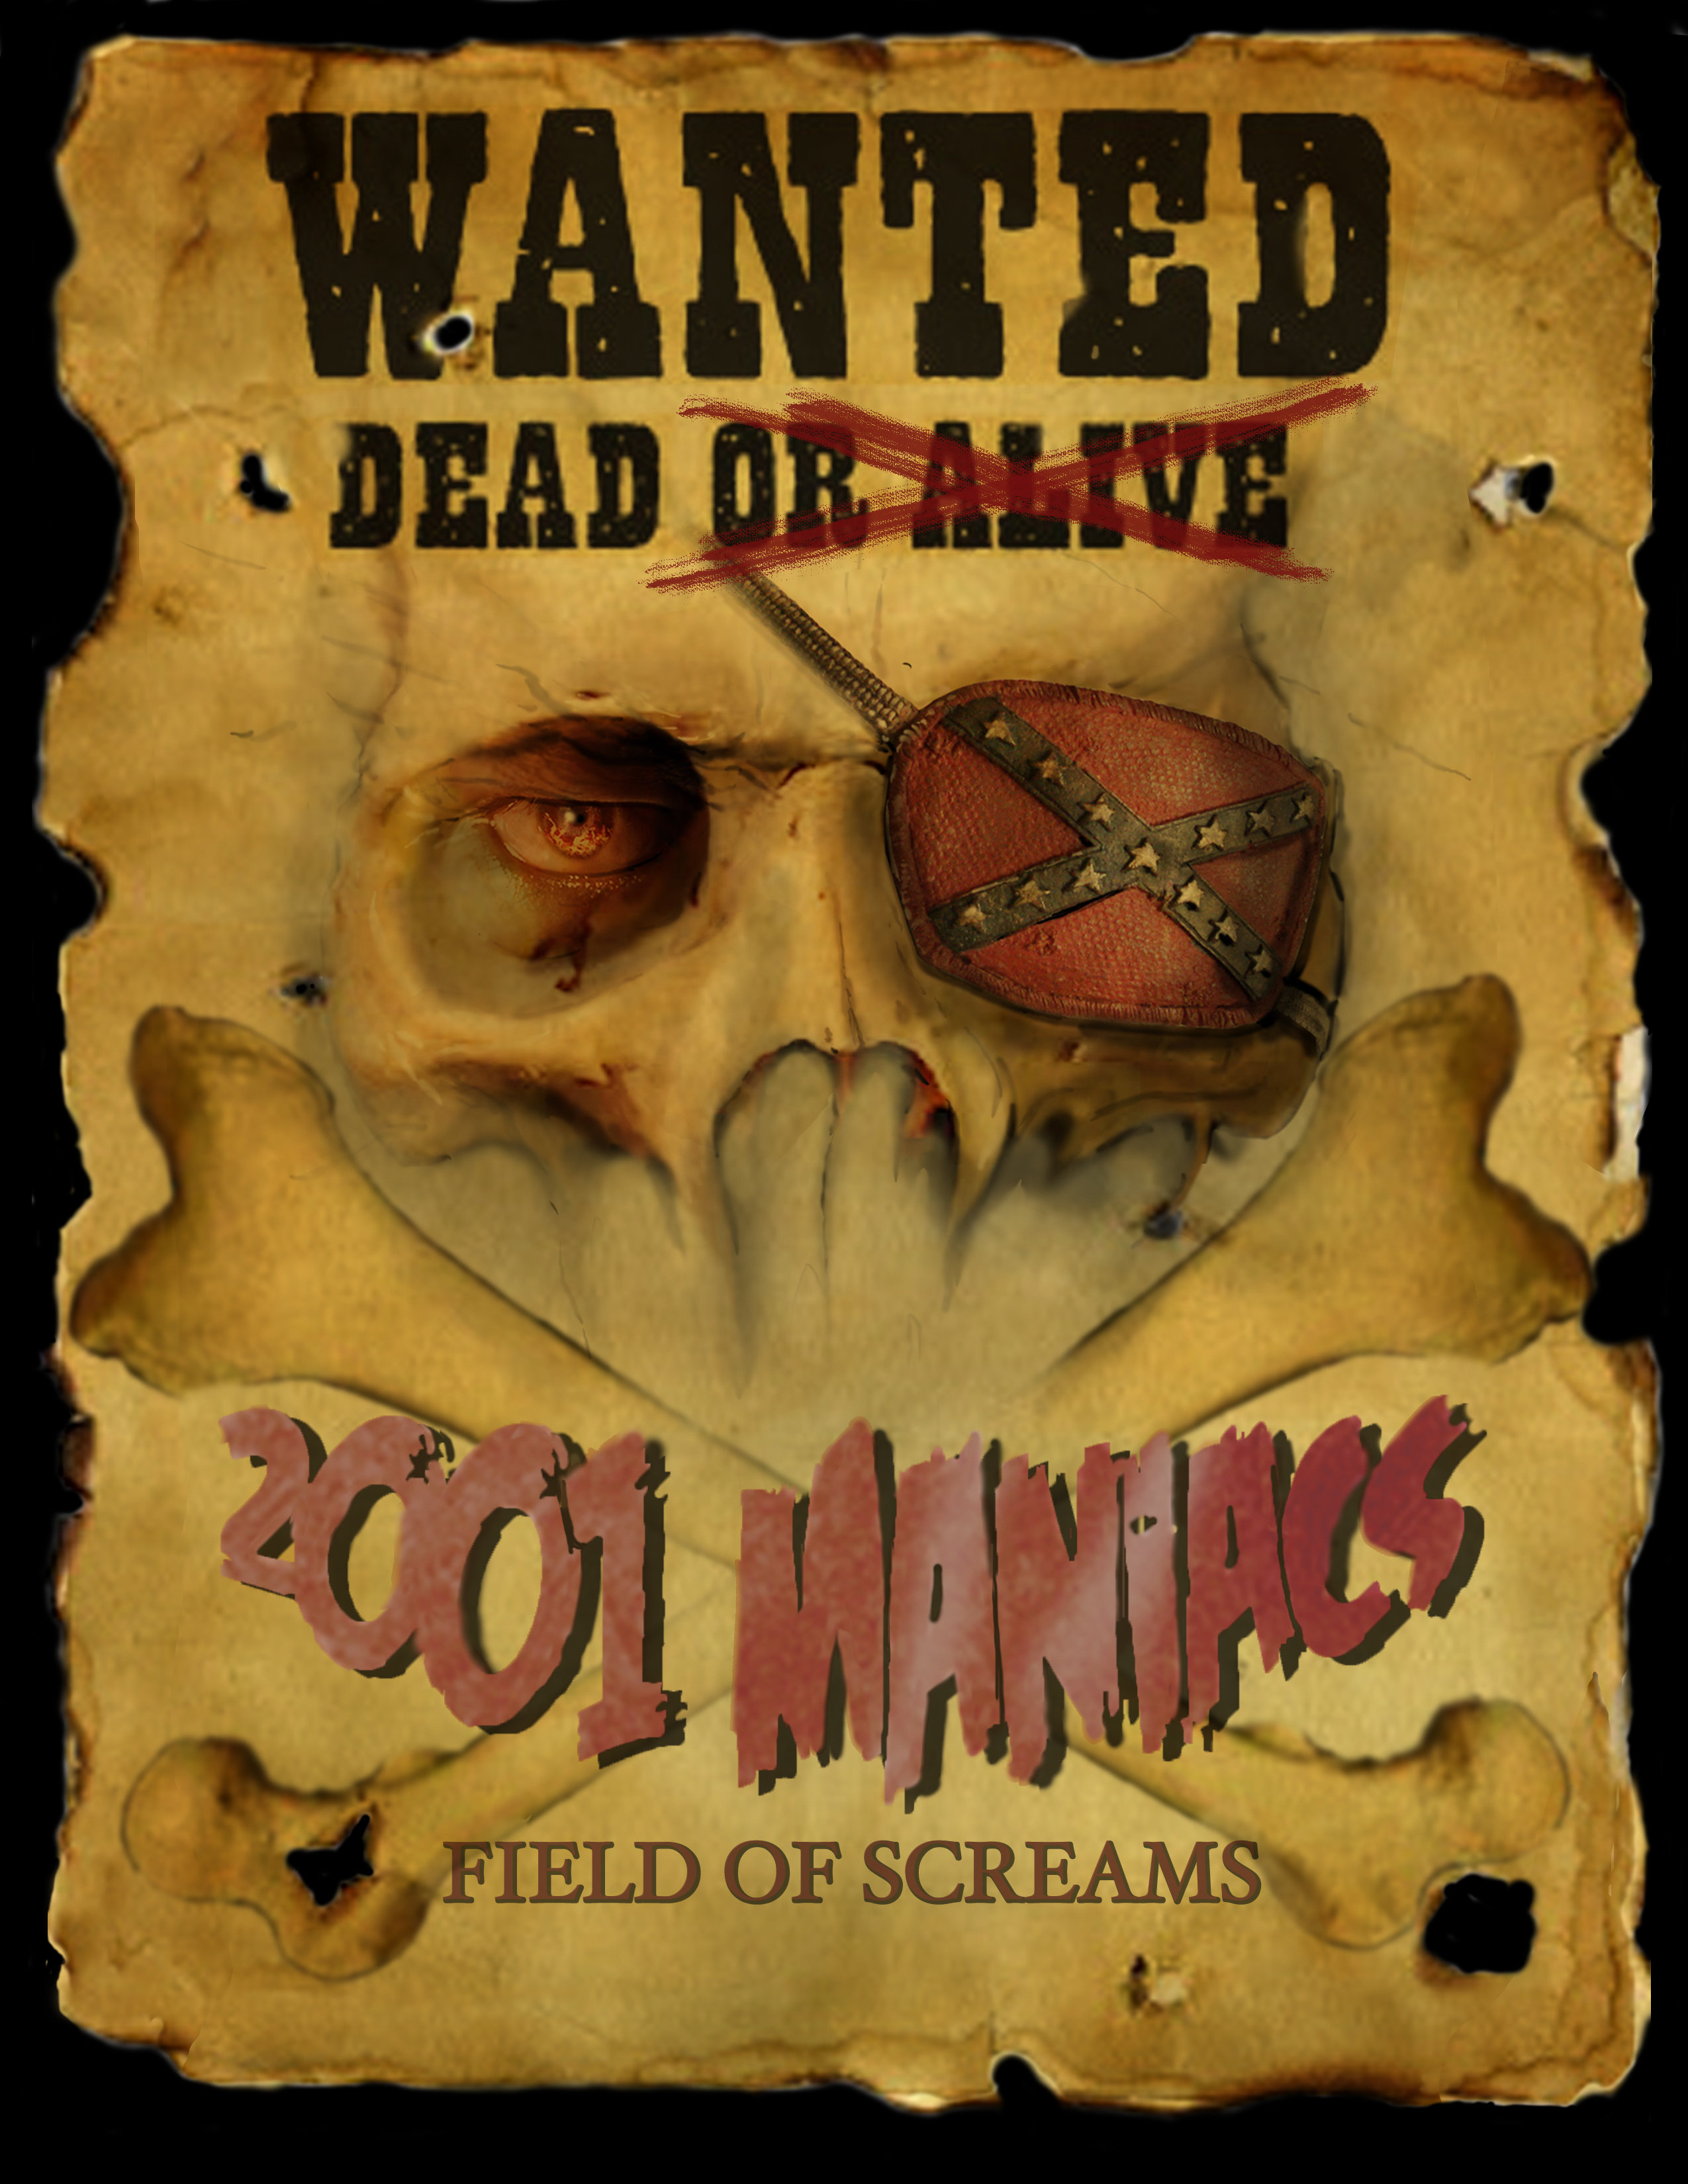 2001 Maniacs: Field of Screams (2010) Screenshot 3 